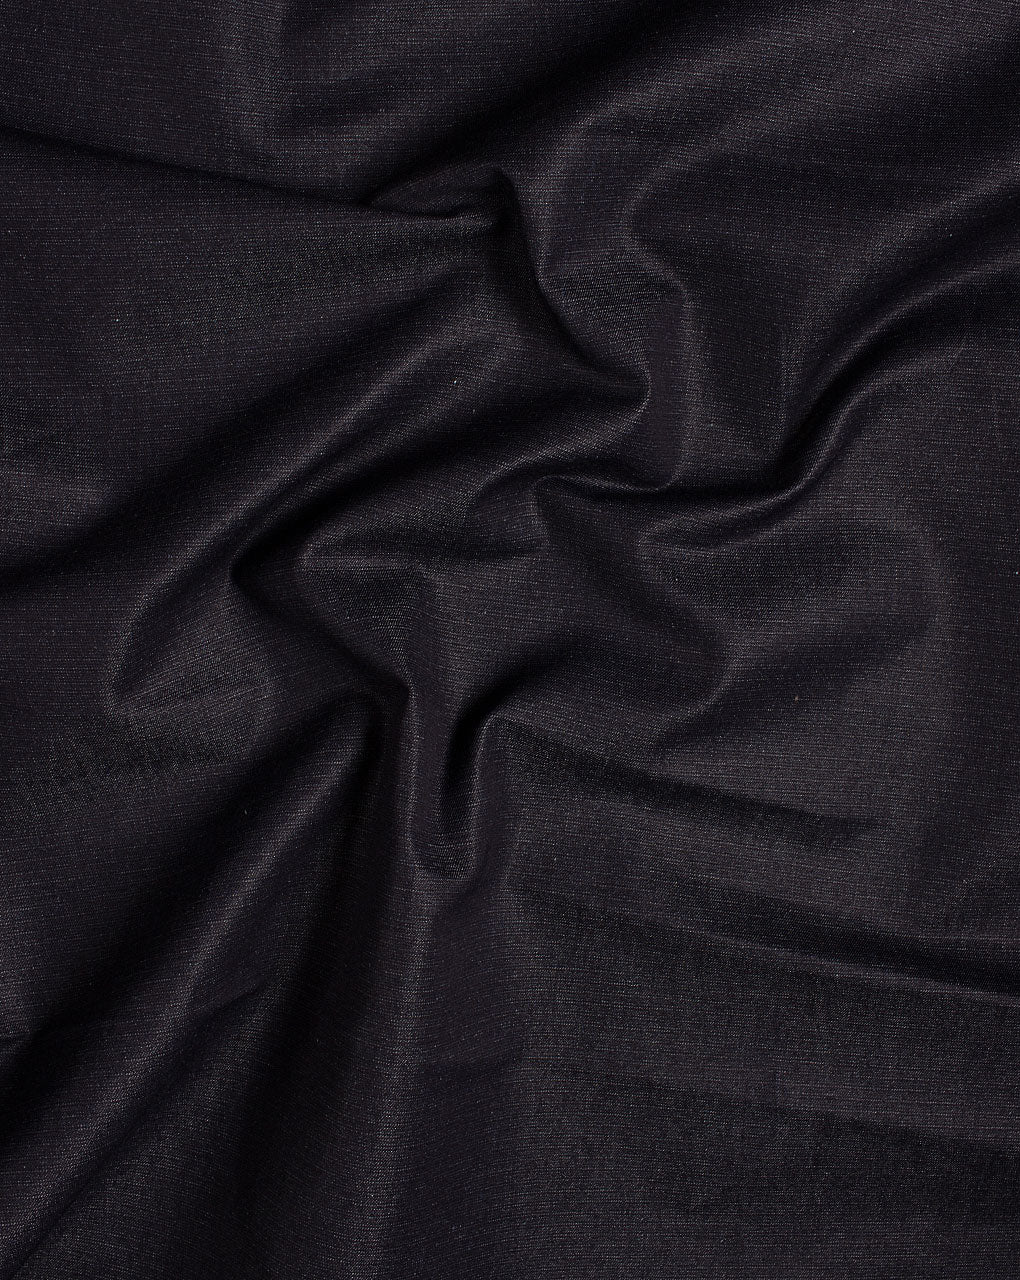 Blue Plain Twill Hemp Cotton Denim Fabric ( Width 56 Inch ) - Fabriclore.com